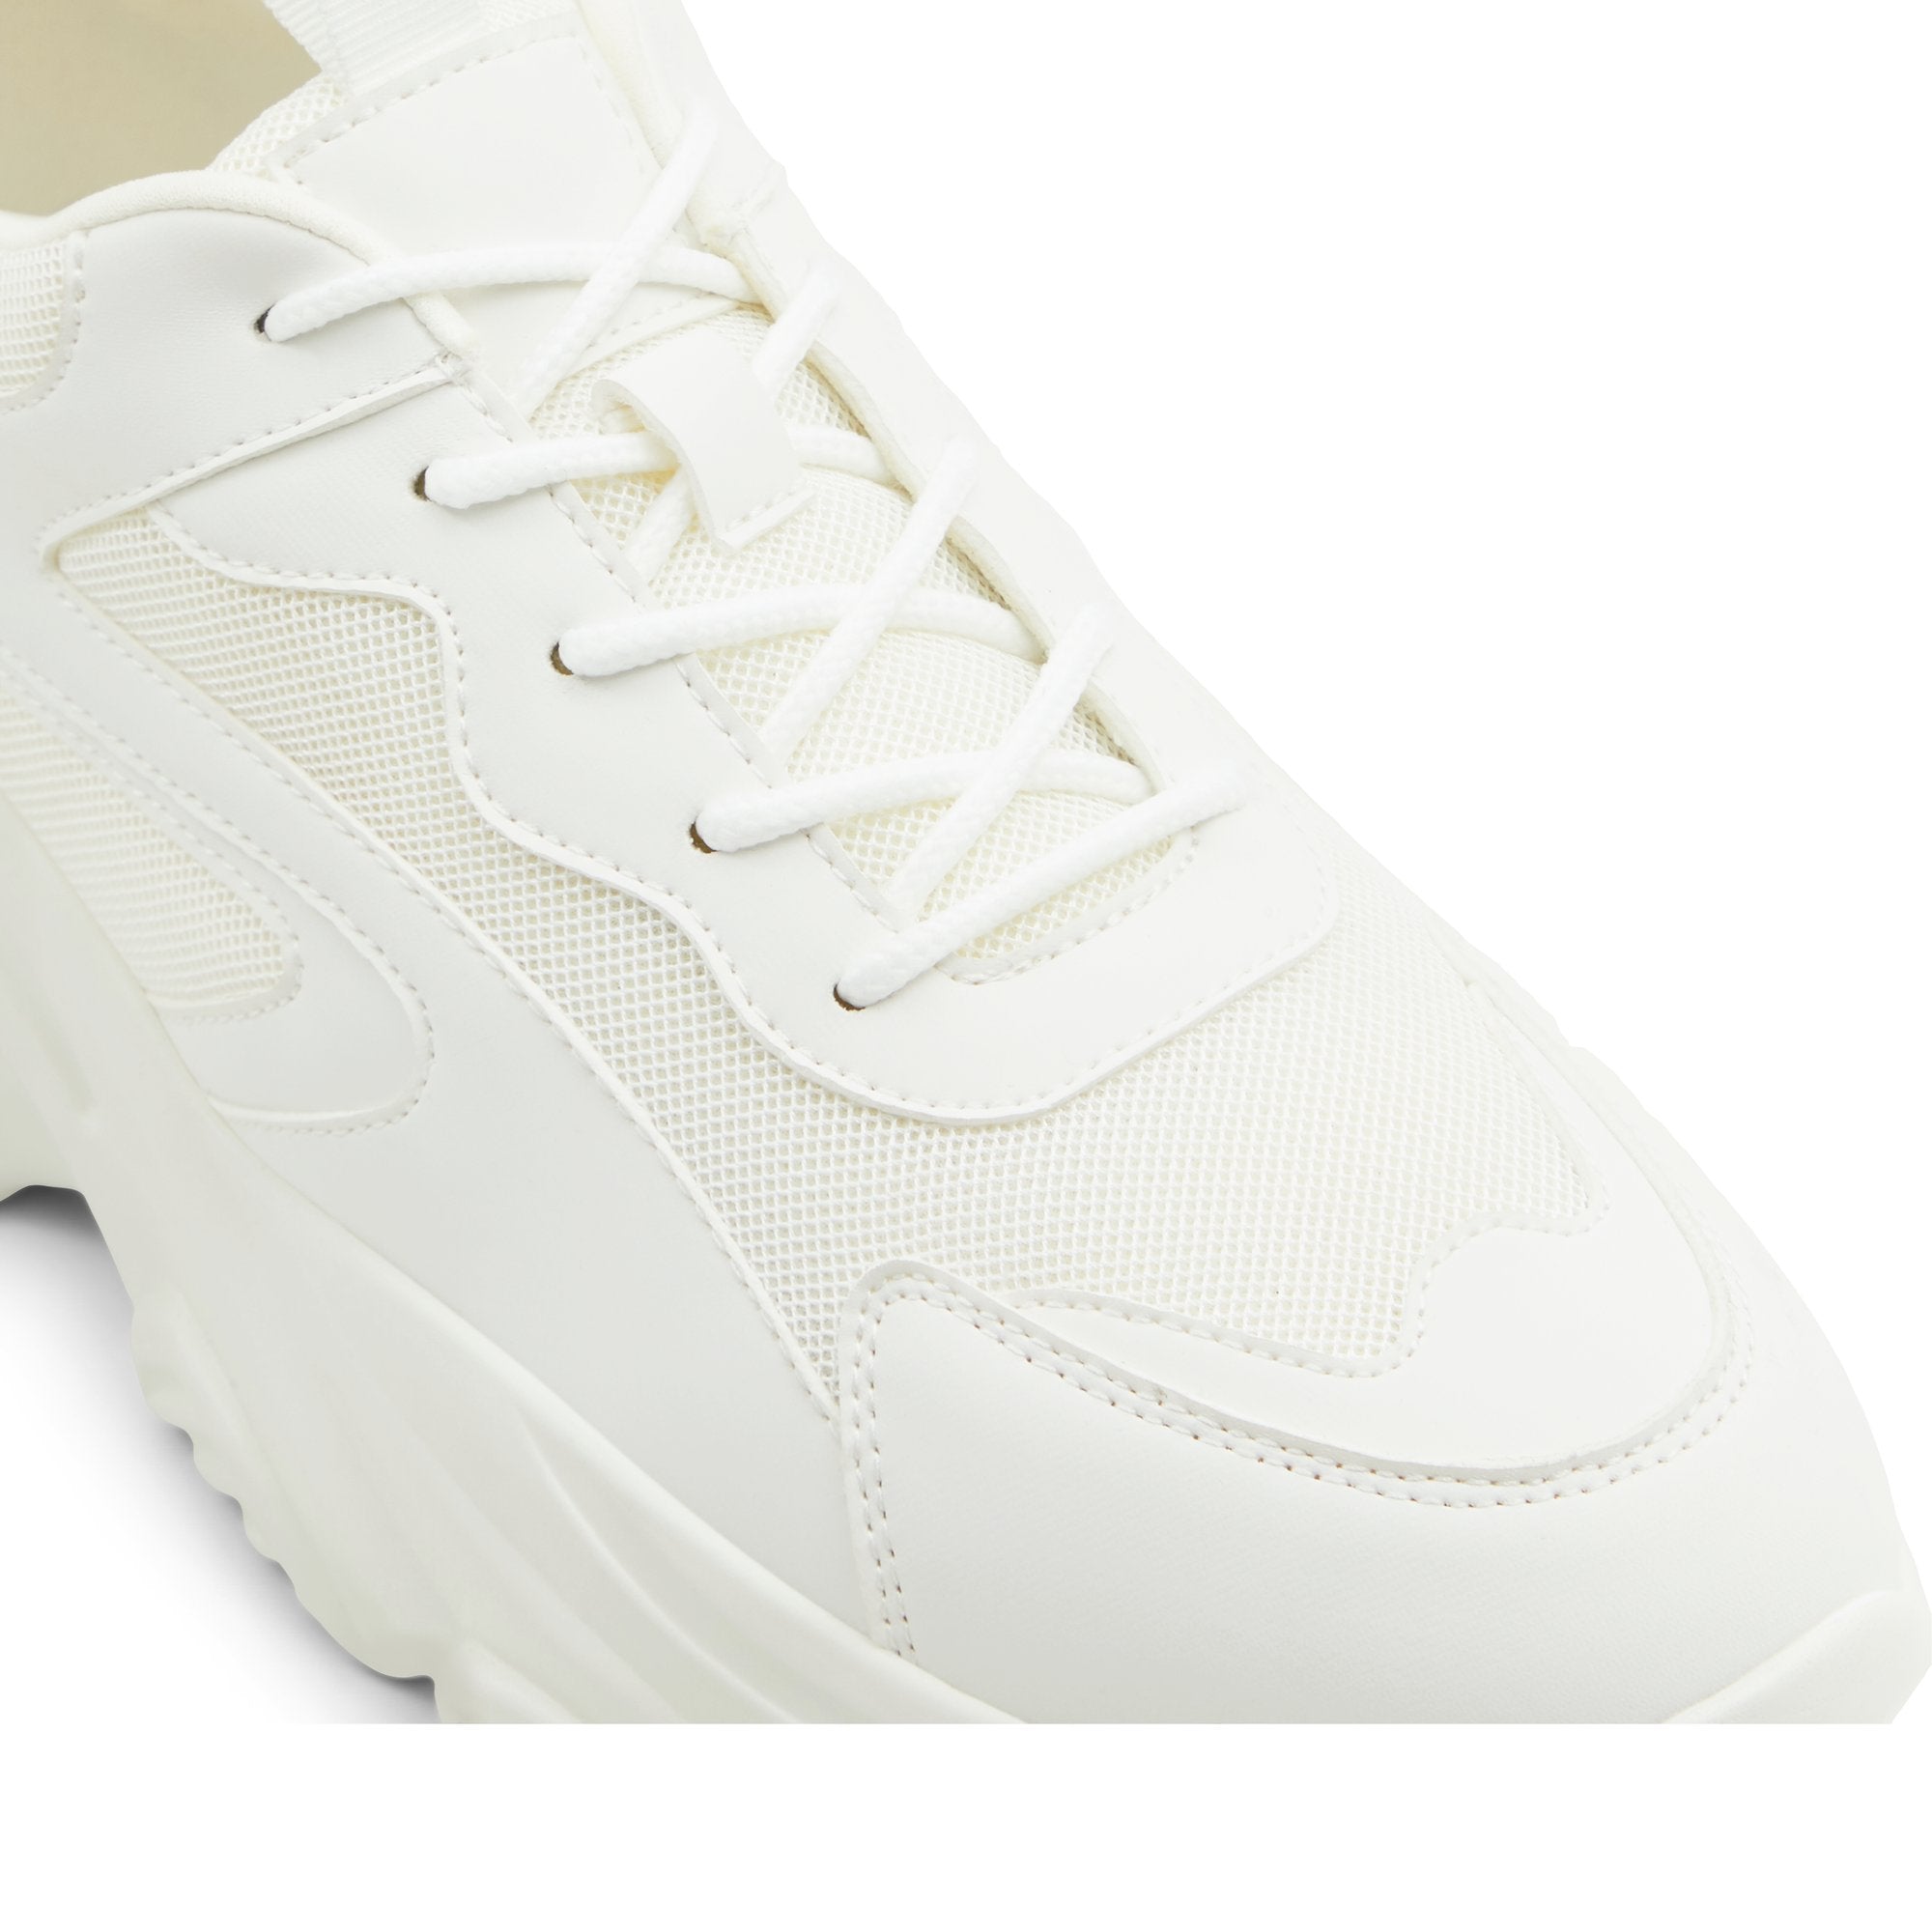 Refreshh / Sneakers Men Shoes - White - CALL IT SPRING KSA